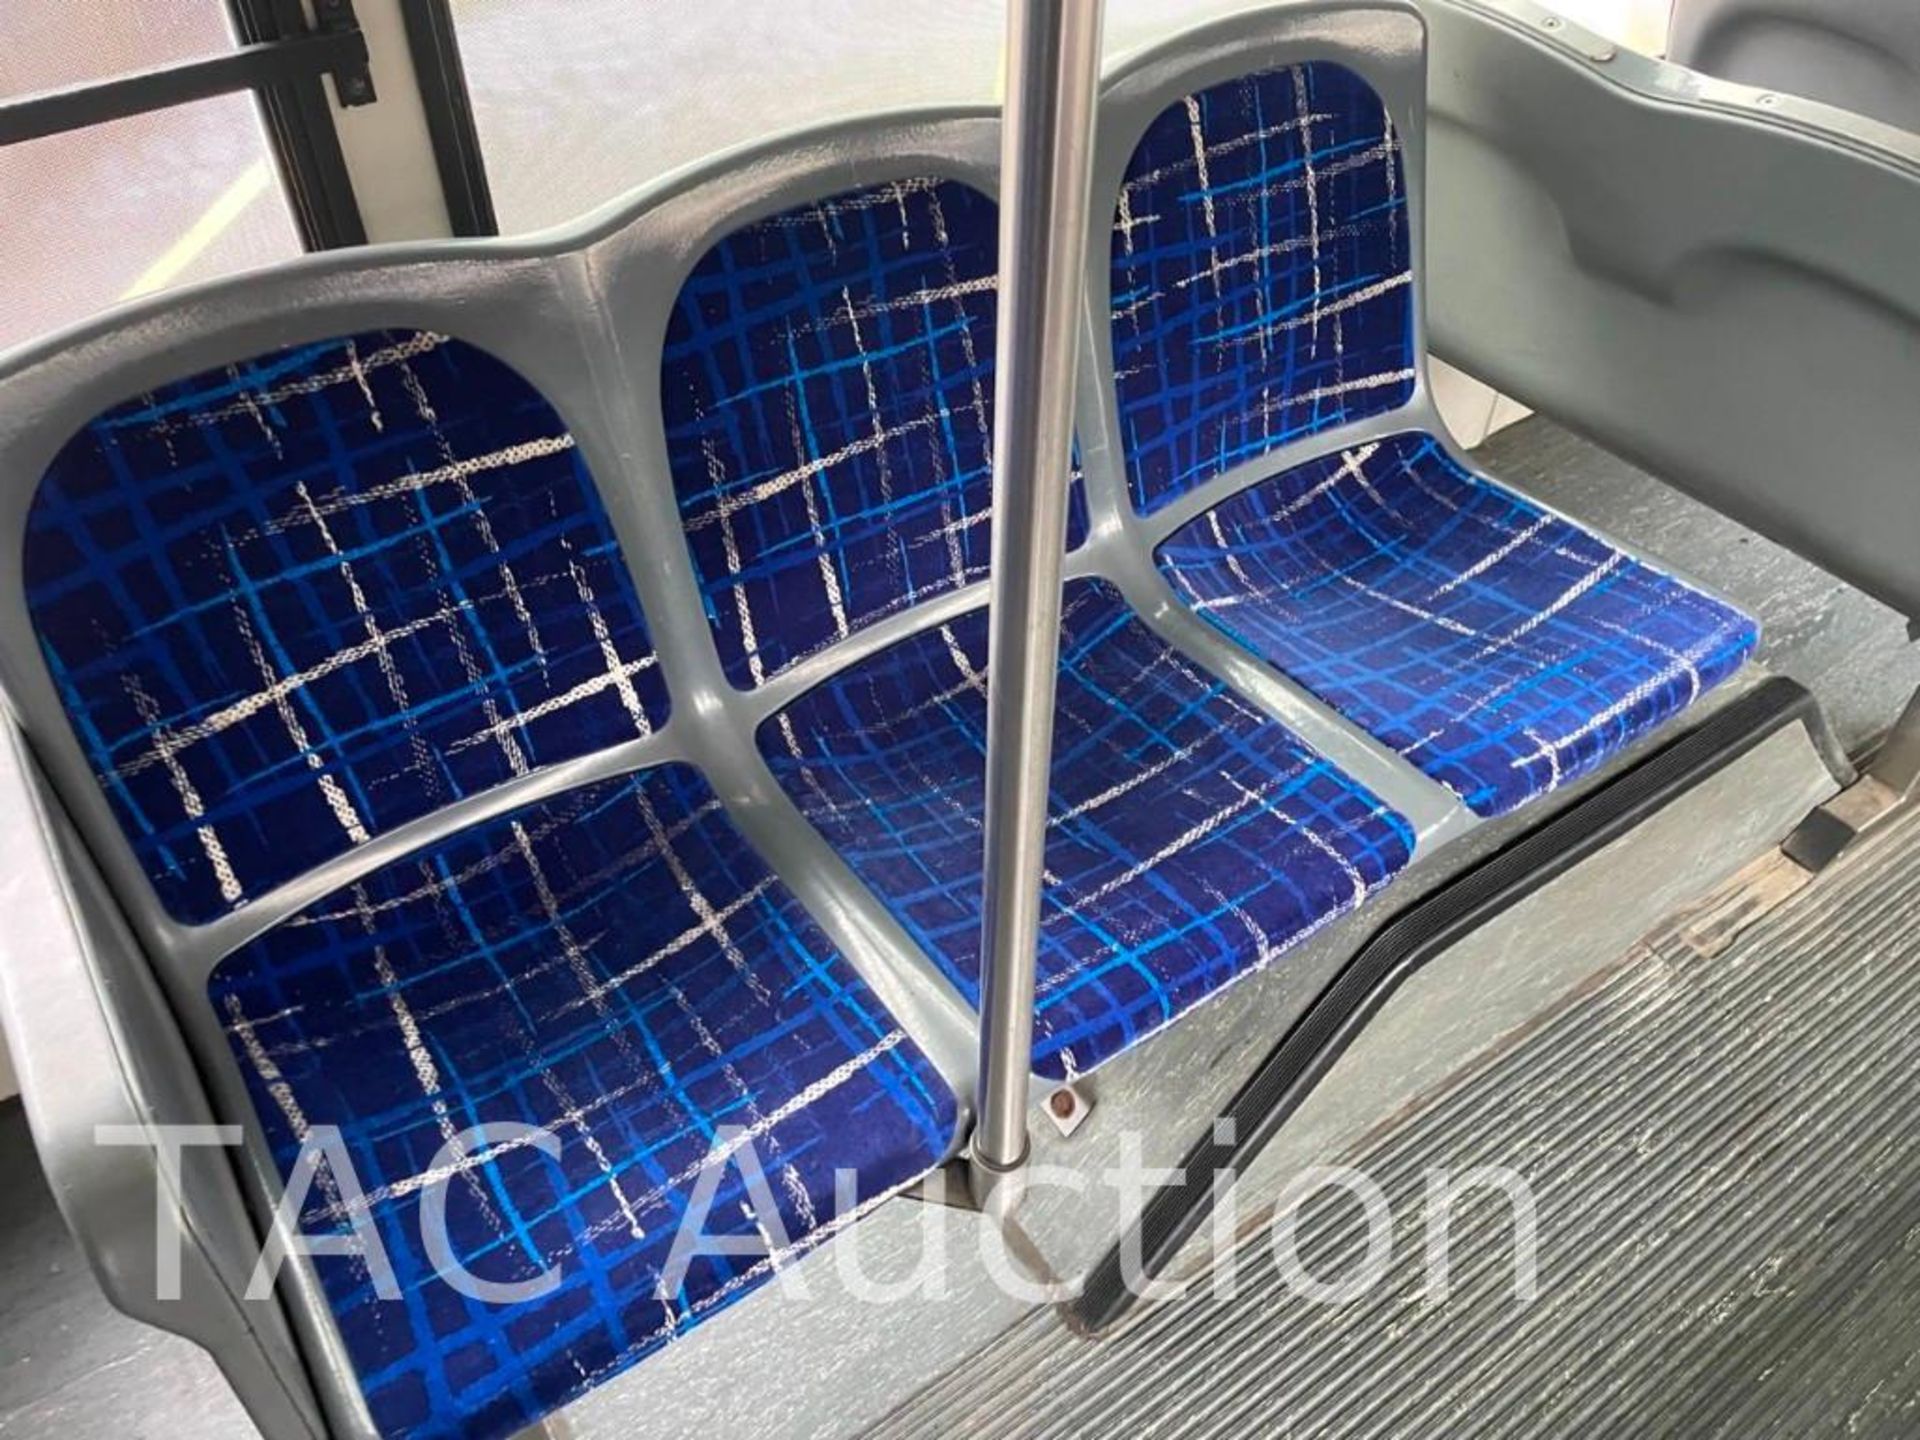 2005 Gillig Low Floor (40) Passenger Coach Transit Bus - Image 50 of 91